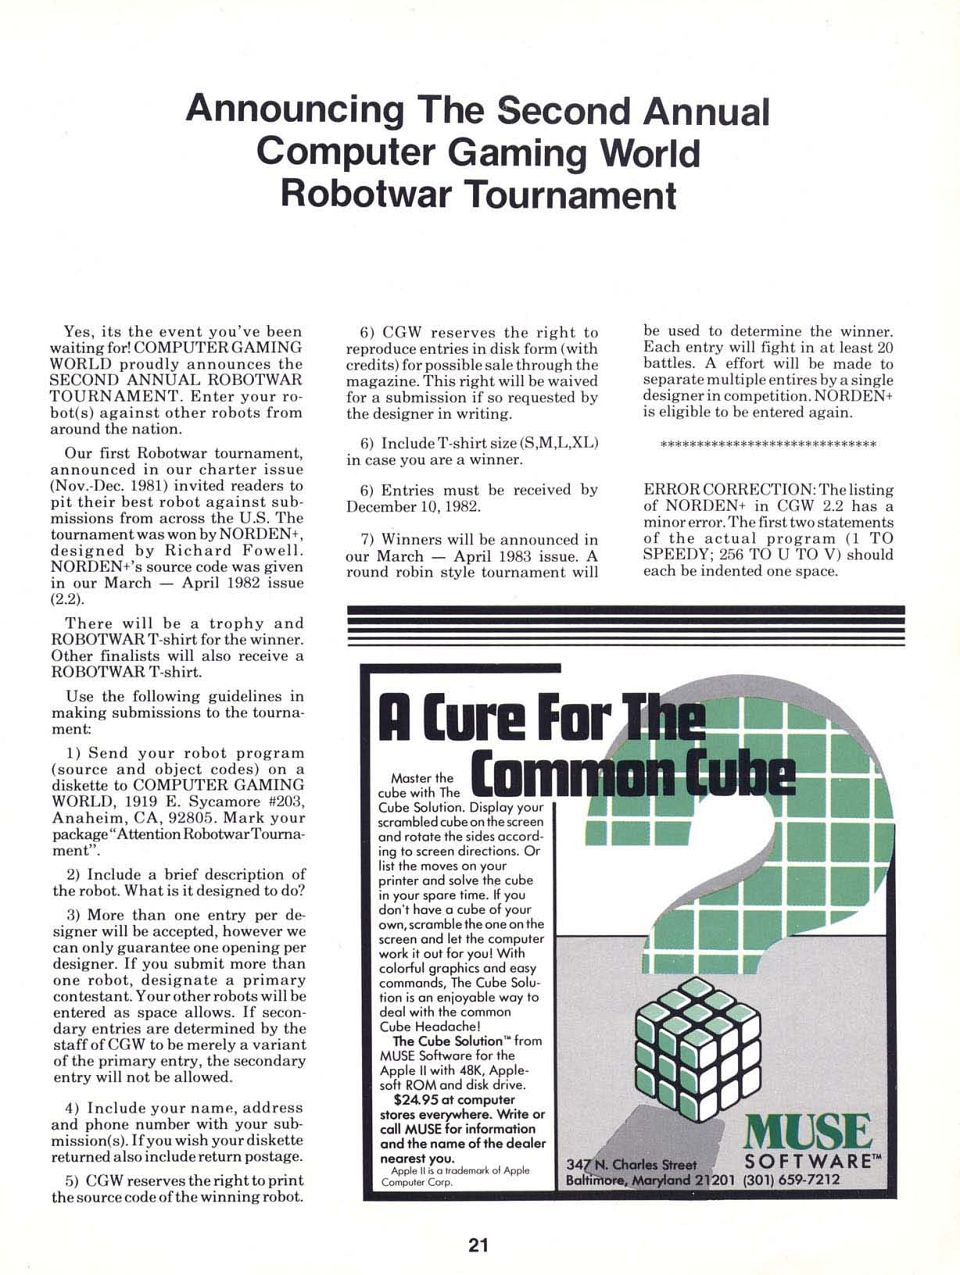 Announcing The Second Annual CGW Robotwar Tournament